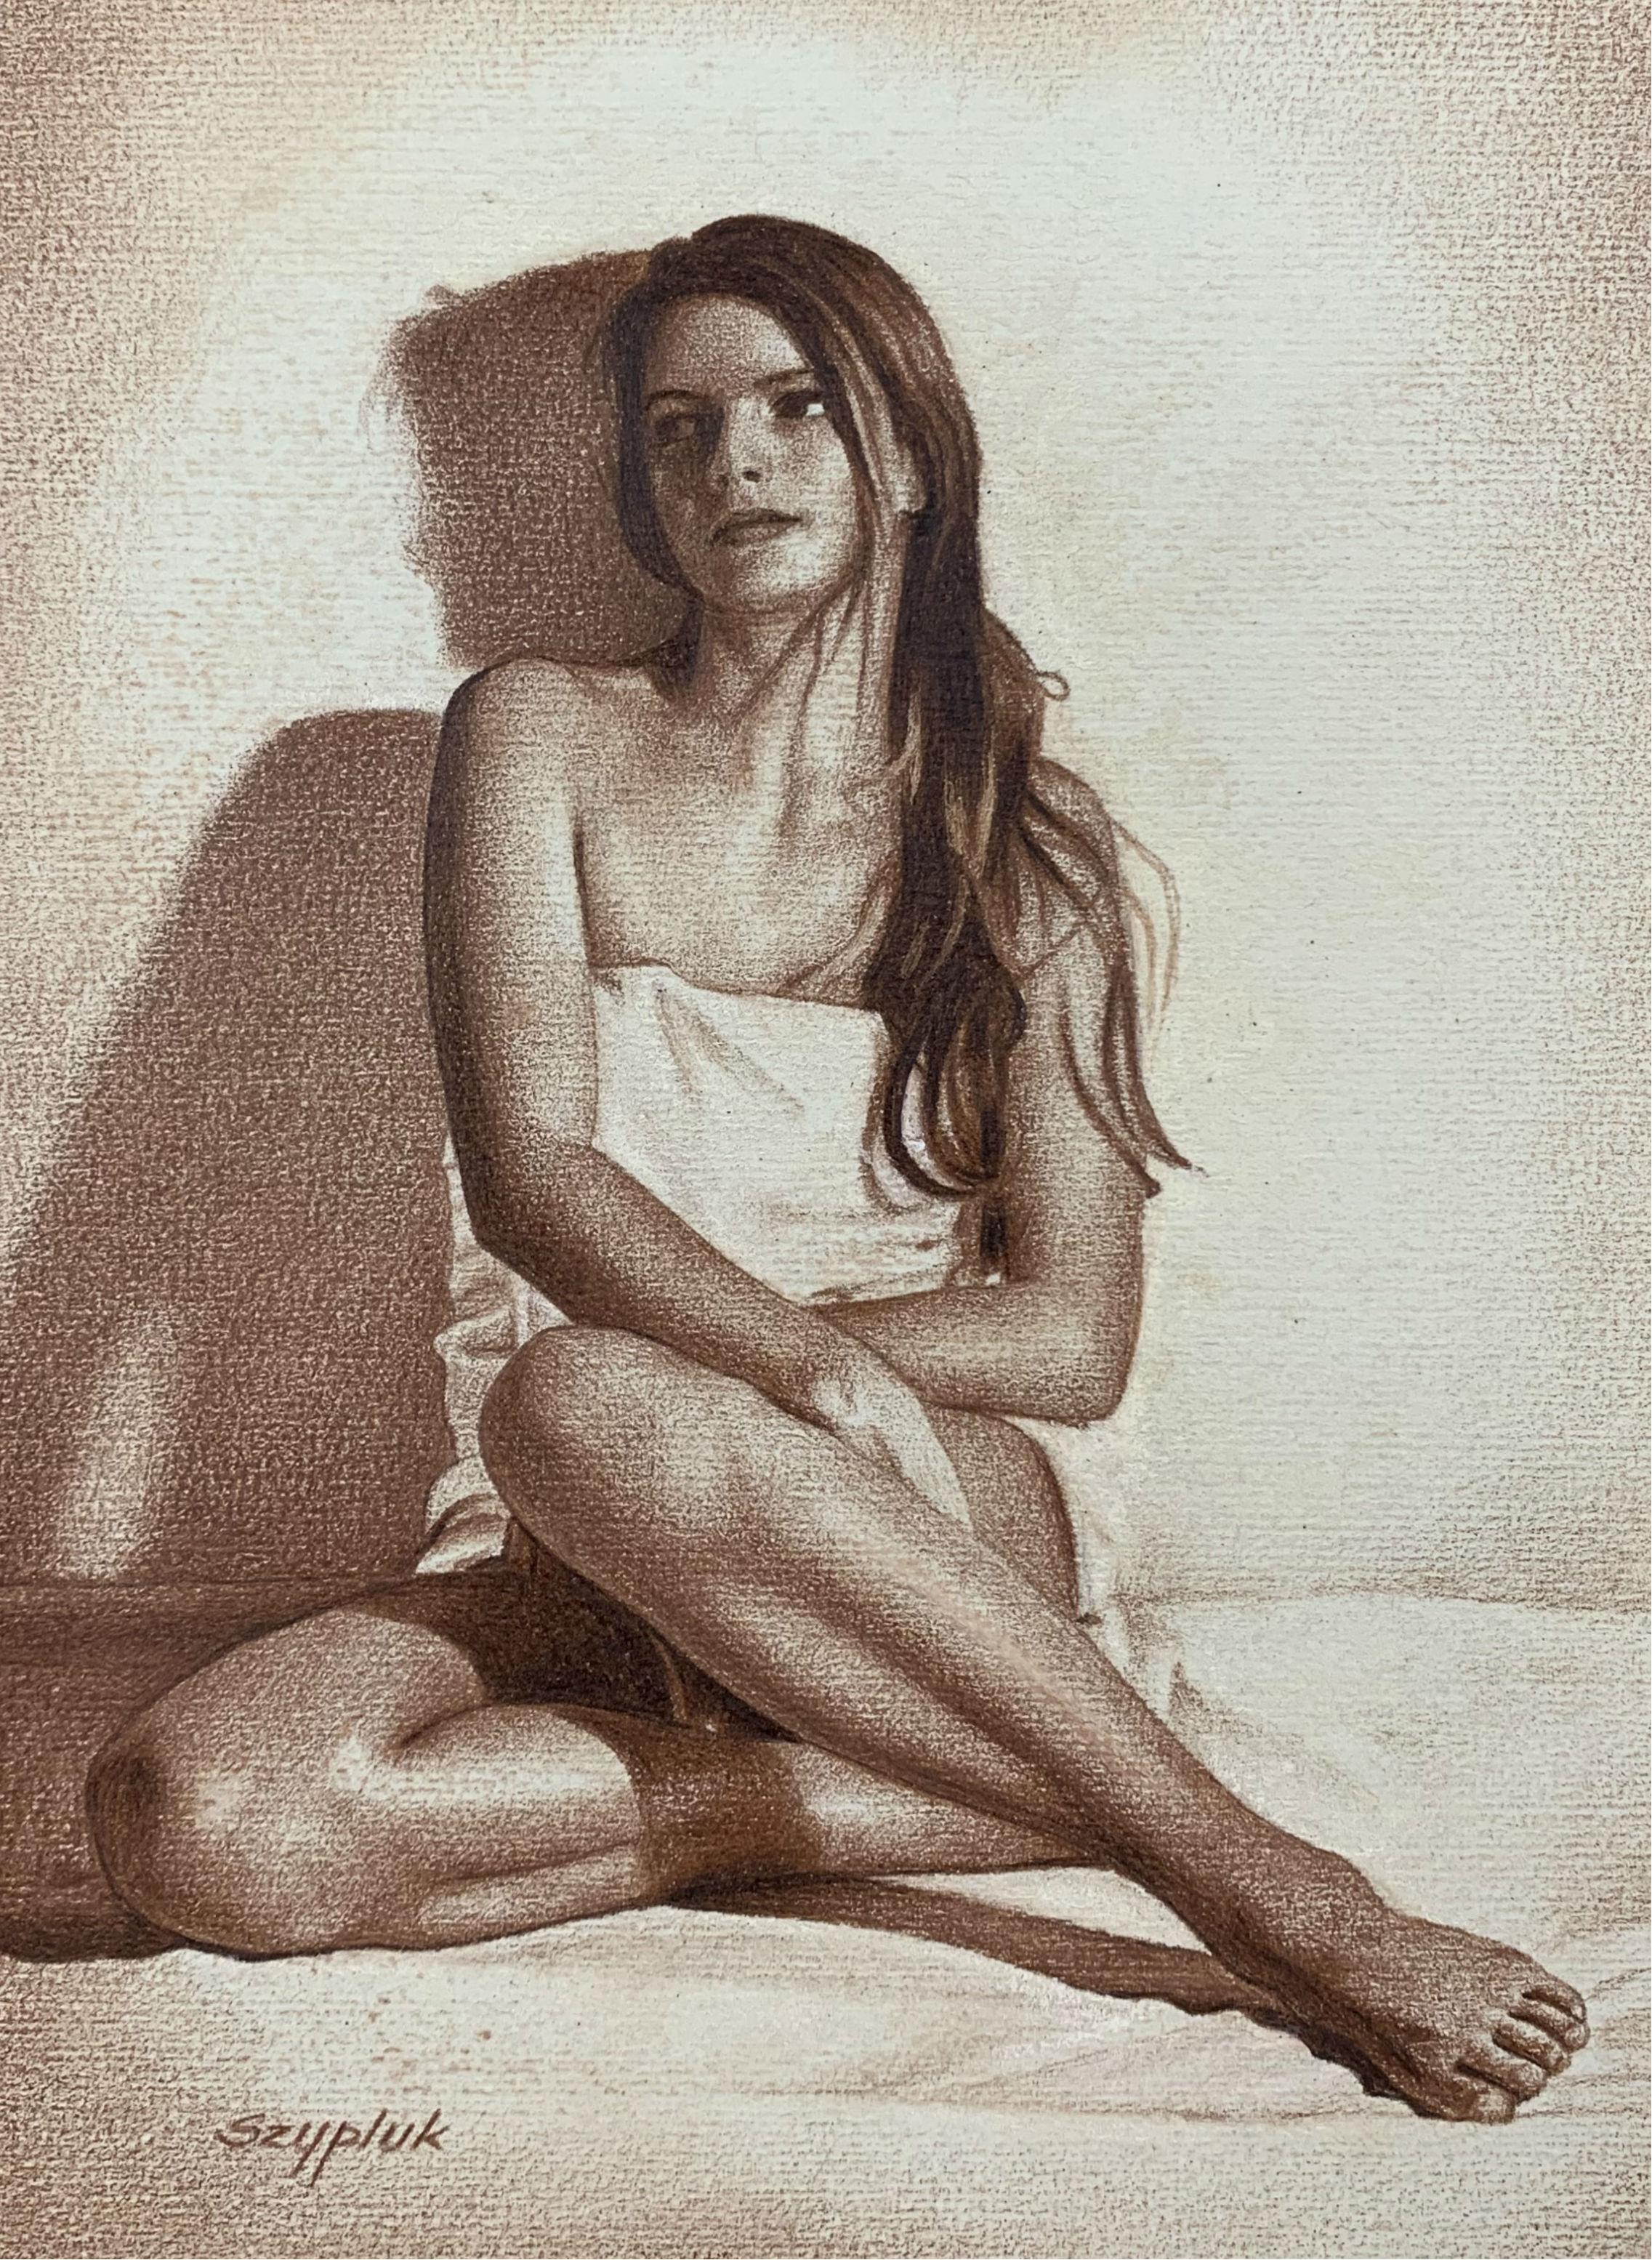 A girl - XXI century, Contemporary Realistic Figurative Mixed Media Drawing   - Art by Andrzej Szypluk